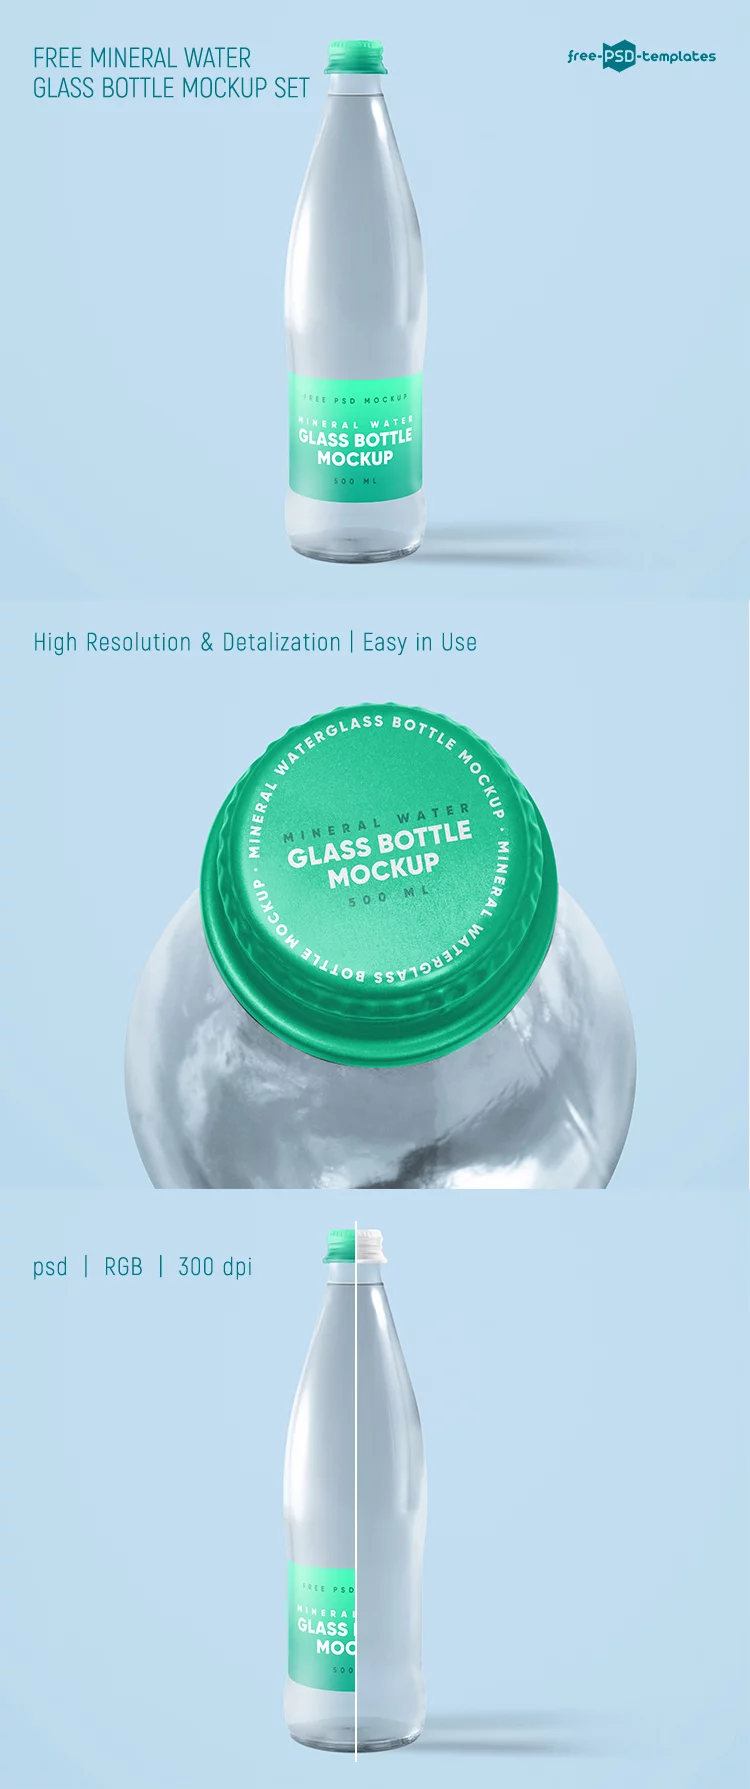 Free Mineral Water Glass Bottle Mockup Set